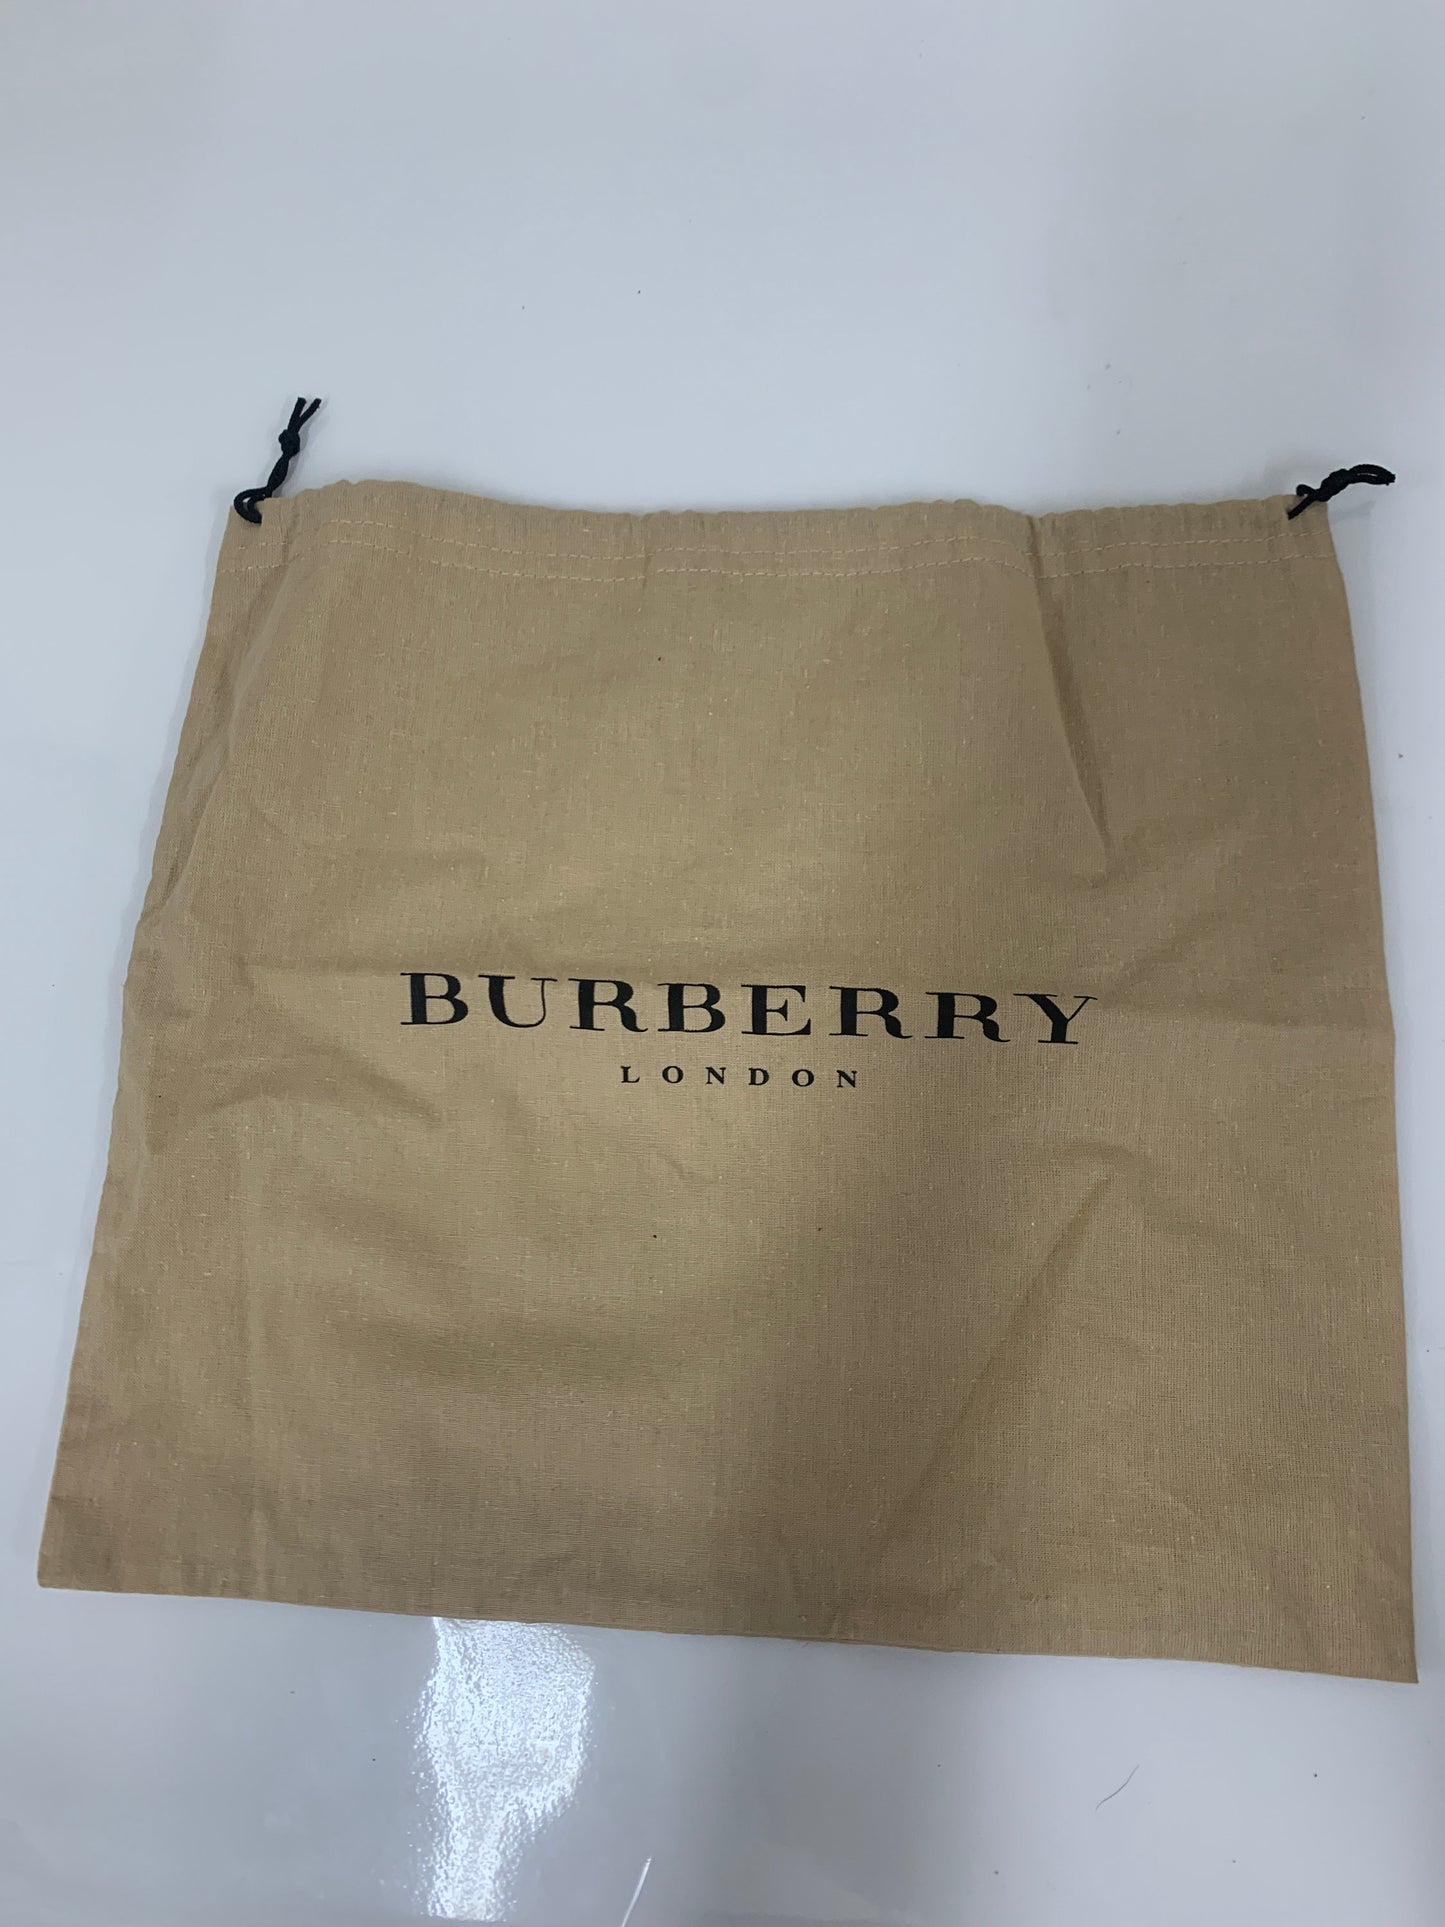 Chanel Prada Coach Burberry Fendi Lancel dust bag handbag Set